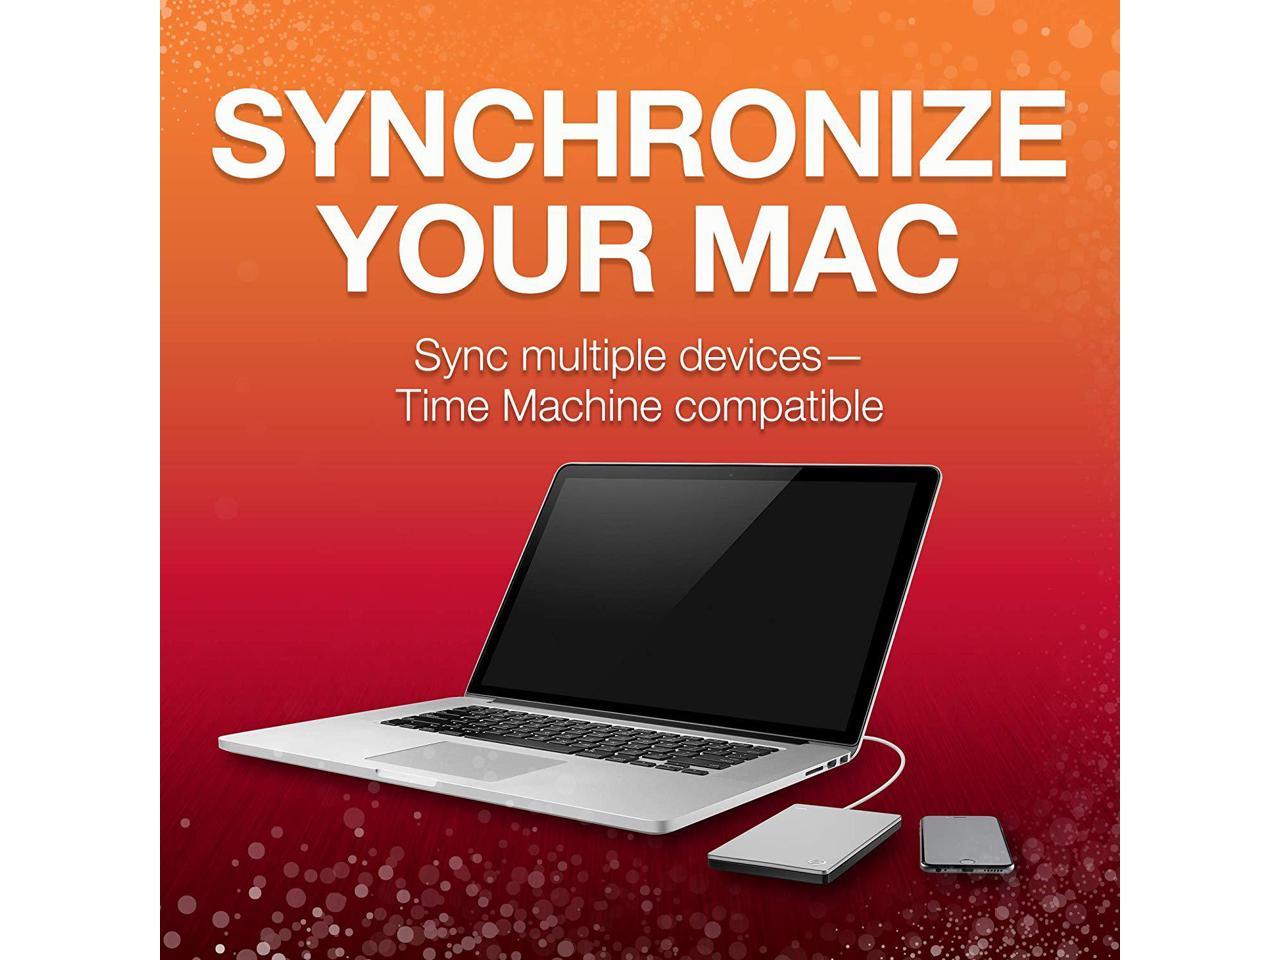 2mo Adobe CC Photography Seagate Backup Plus 2TB Portable External Hard Drive for Mac USB 3.0 STDS2000100 